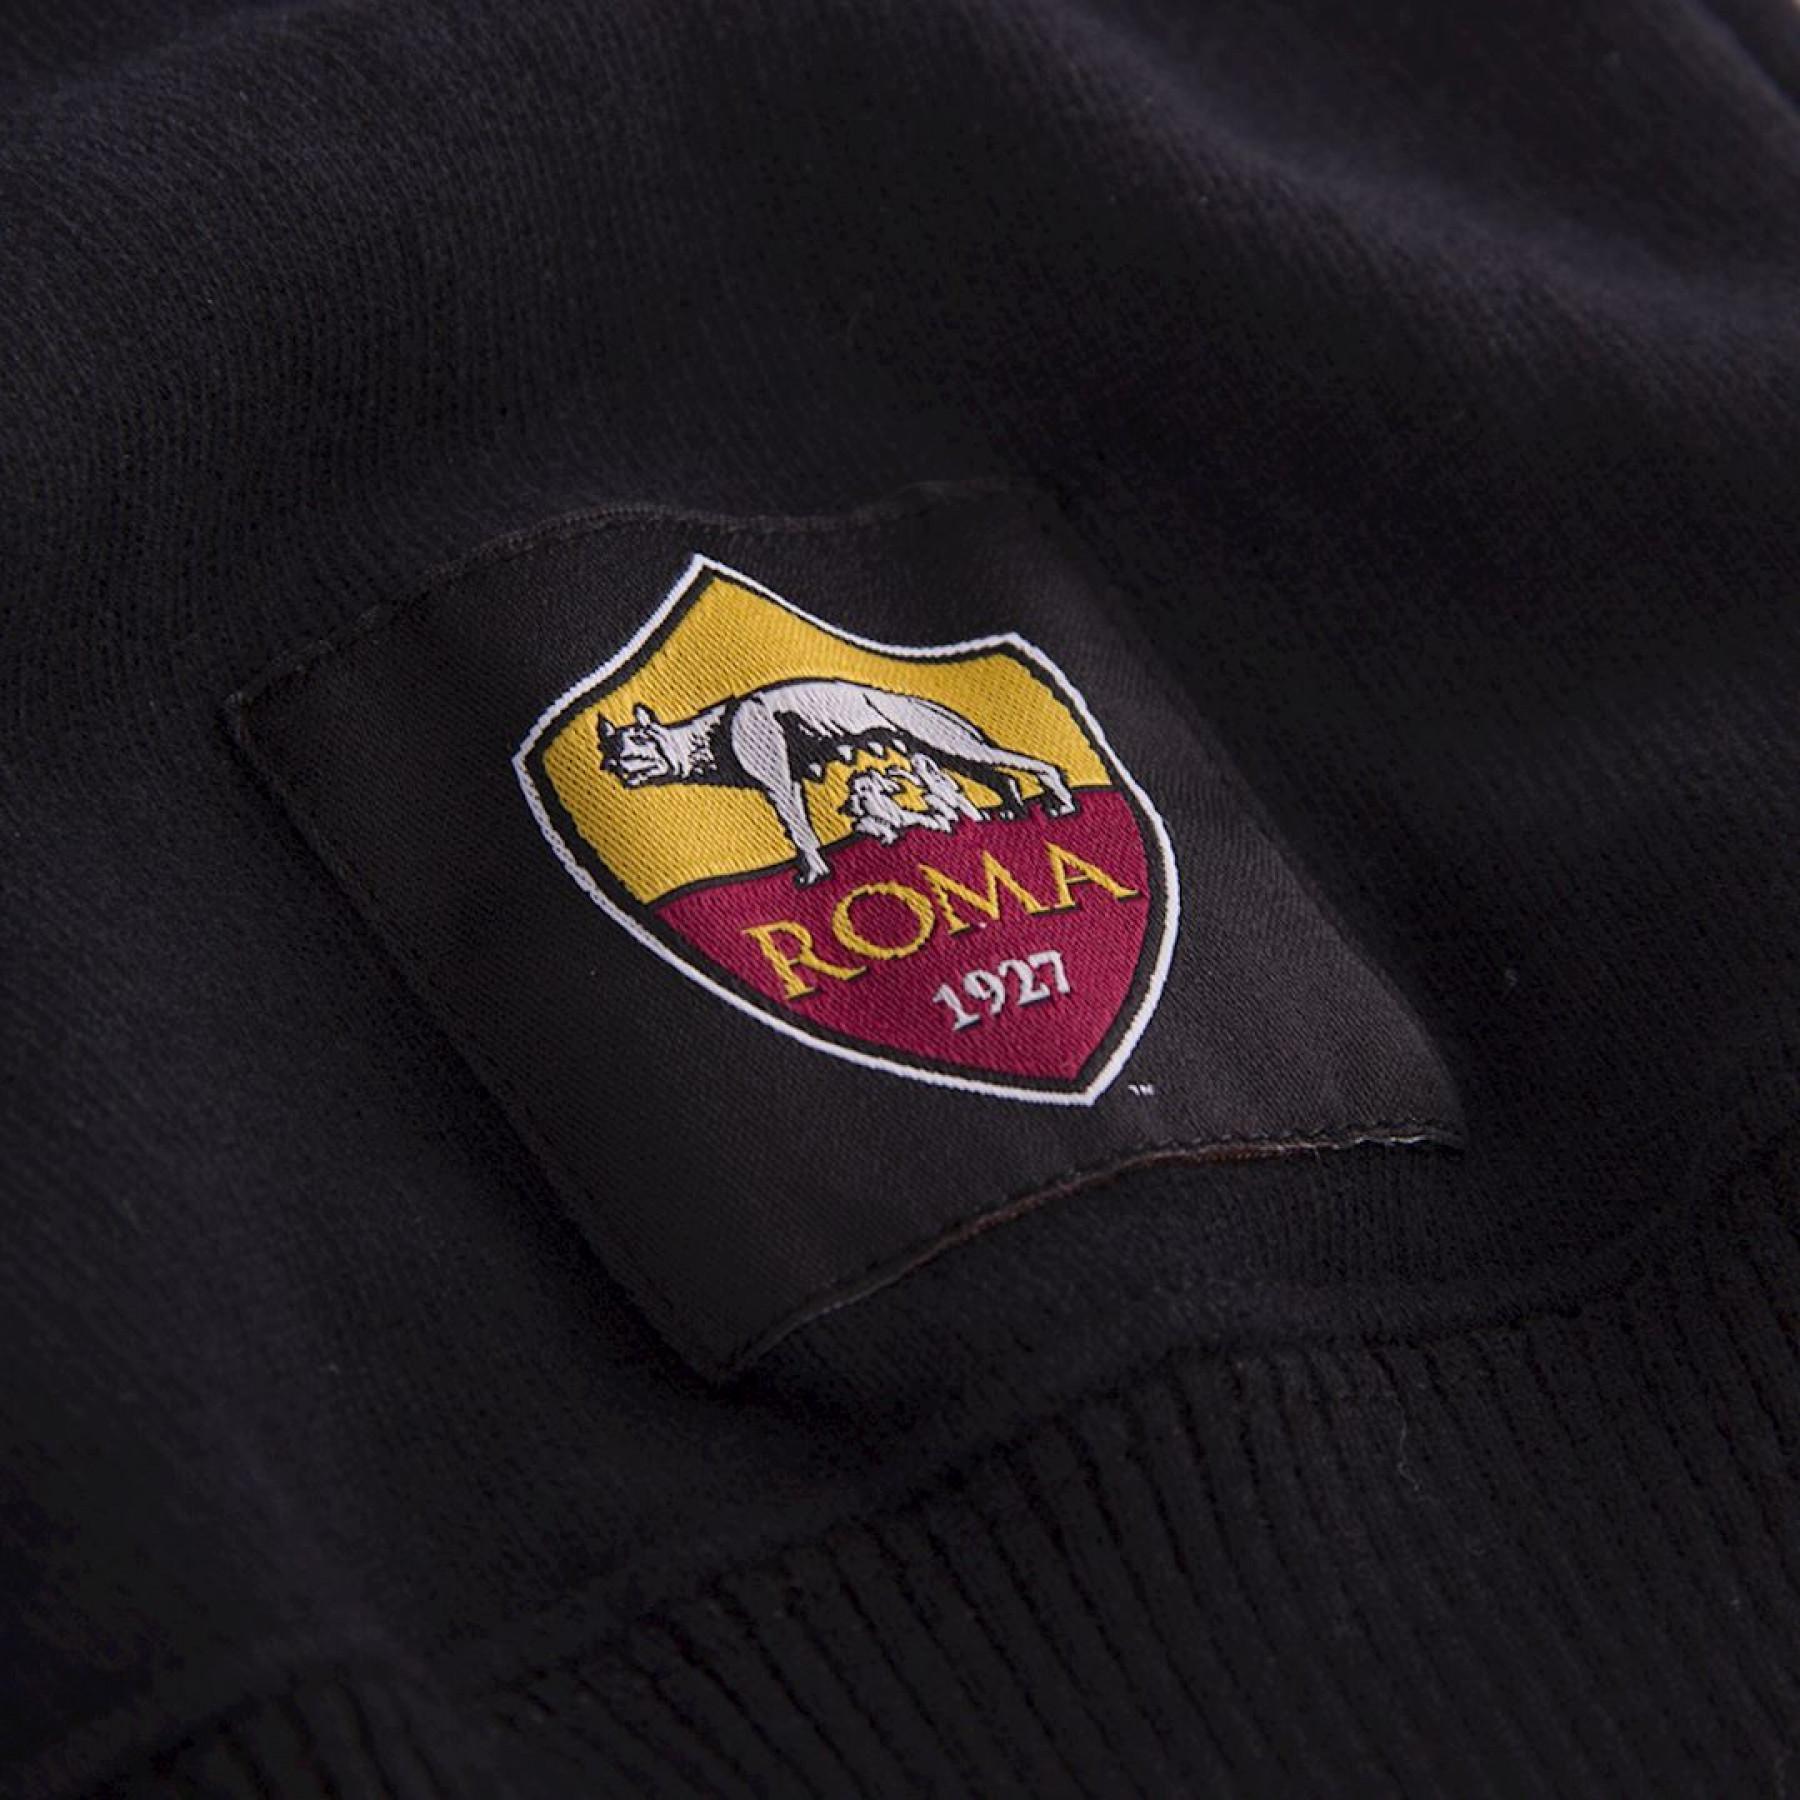 Long-sleeved retro jersey Copa AS Roma